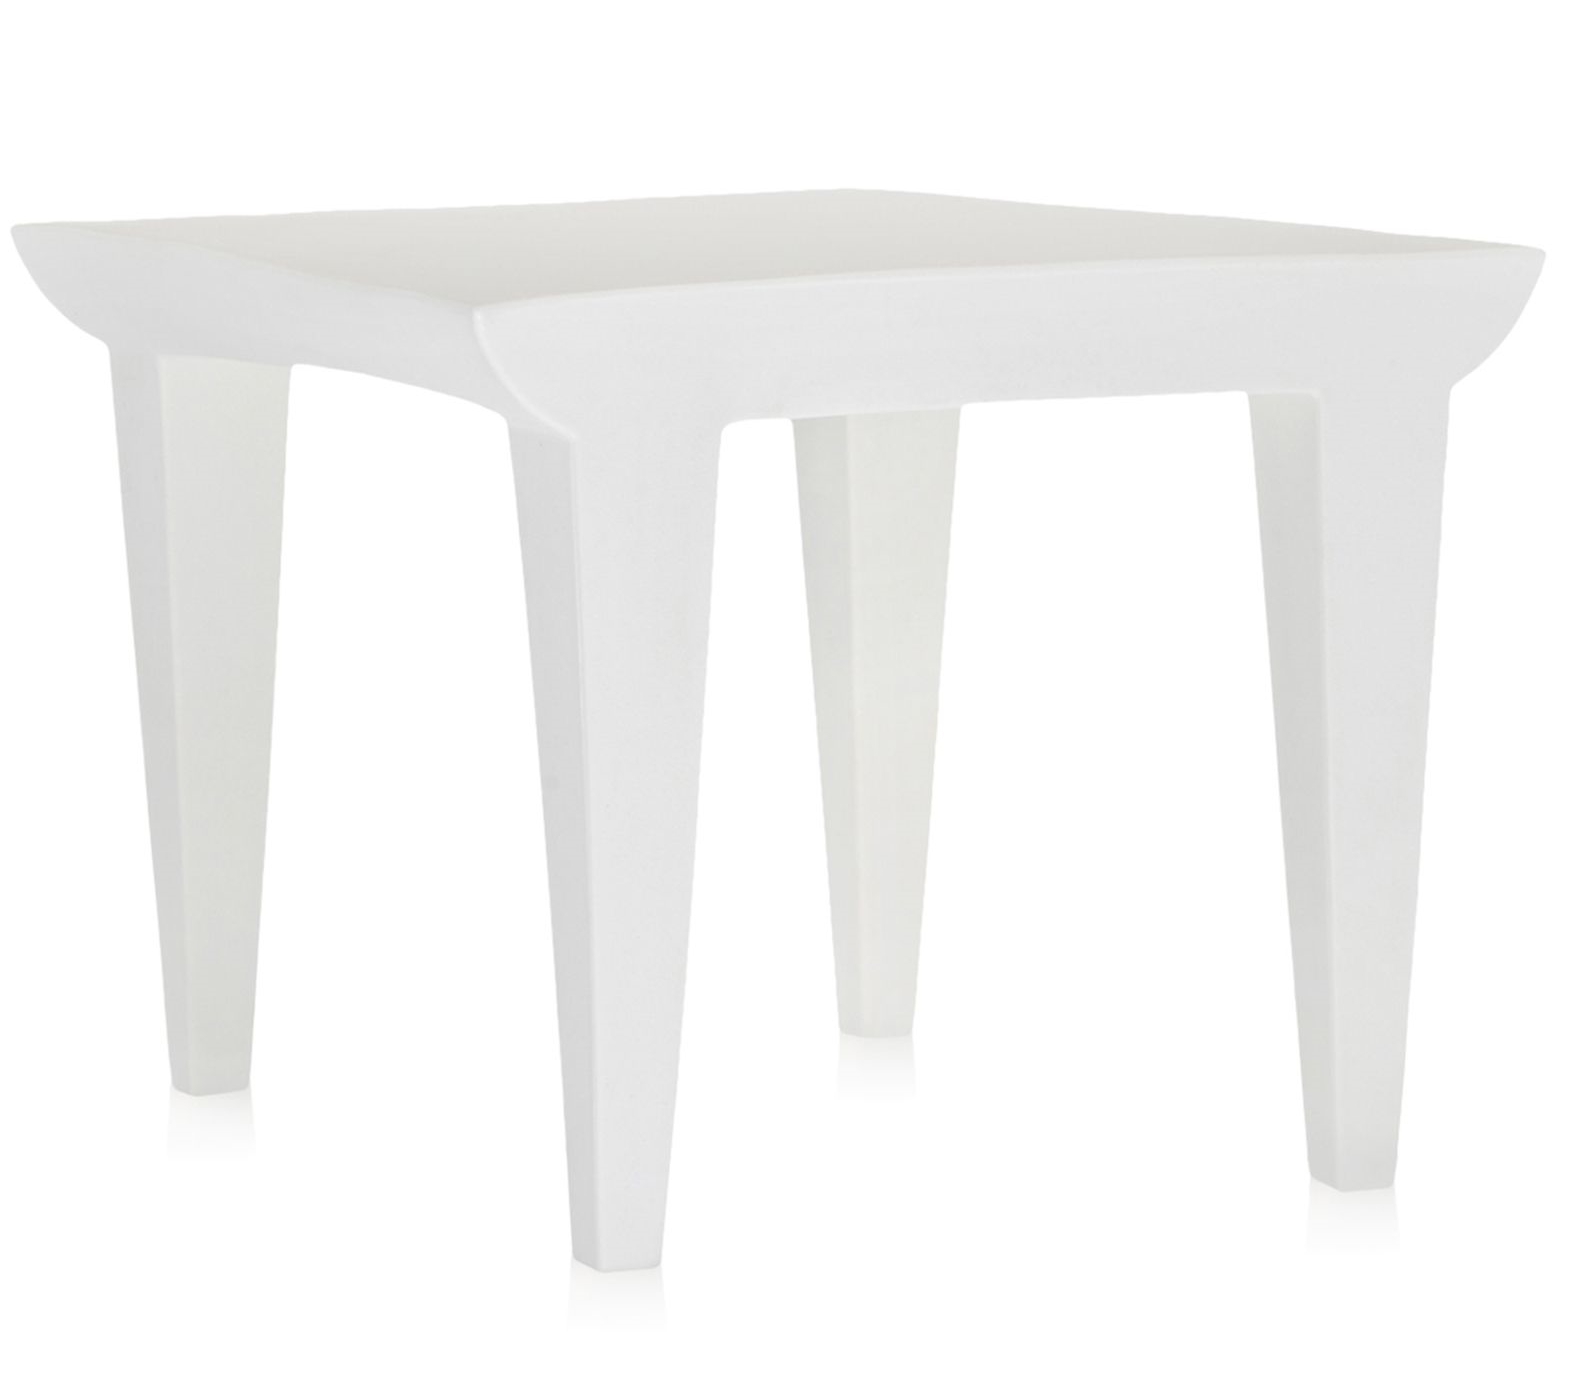 Masuta Kartell Bubble design Philippe Starck 51.5×51.5cm hx41.5cm alb zinc 51.5x51.5cm imagine reduss.ro 2022